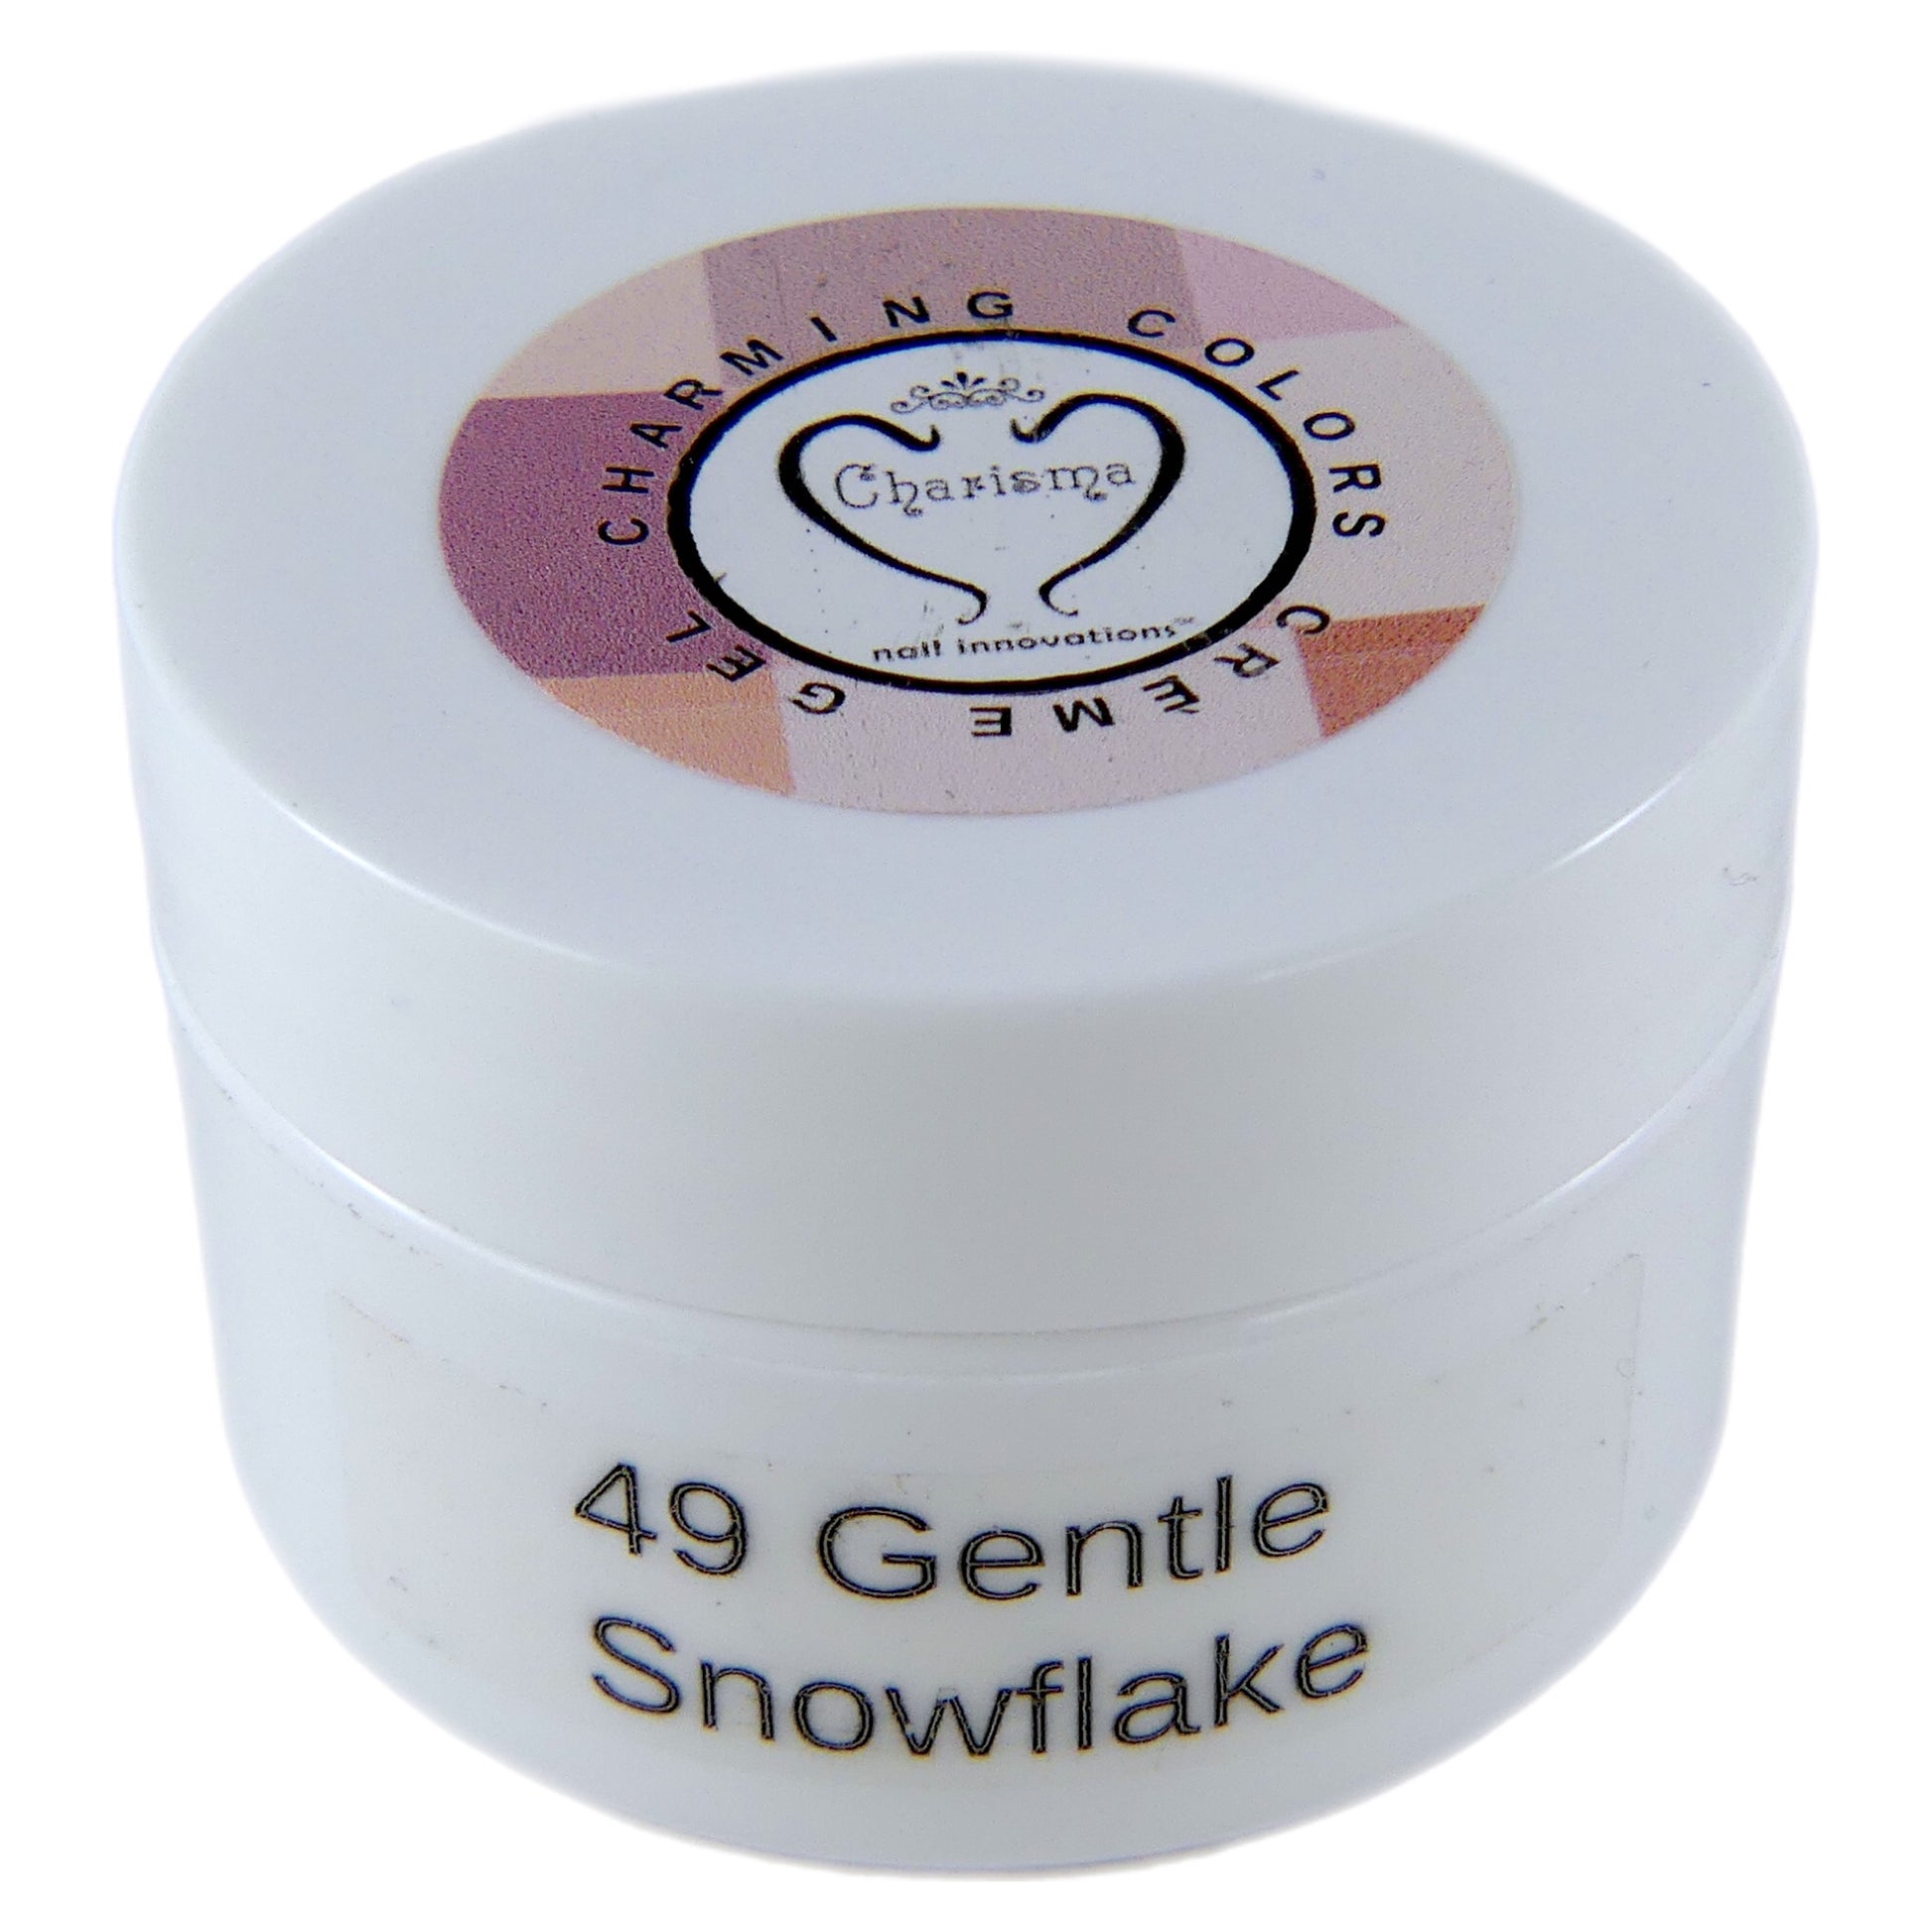 Builder Gel (Gentle Snowflake #49) 1/2 oz - My Little Nail Art Shop